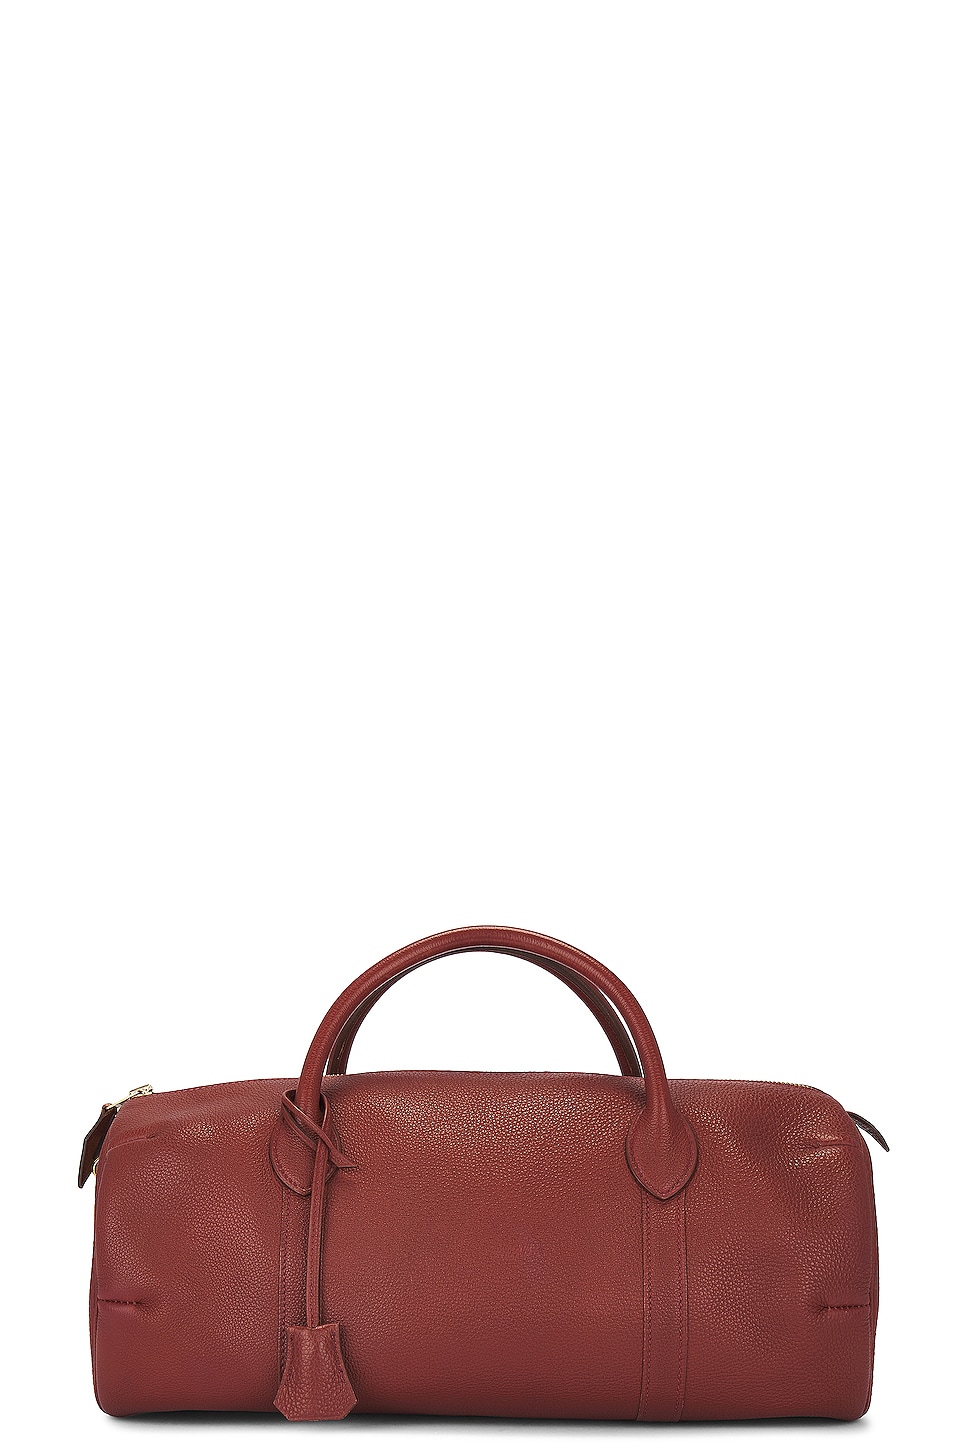 Mademoiselle Leather Handbag in Brown